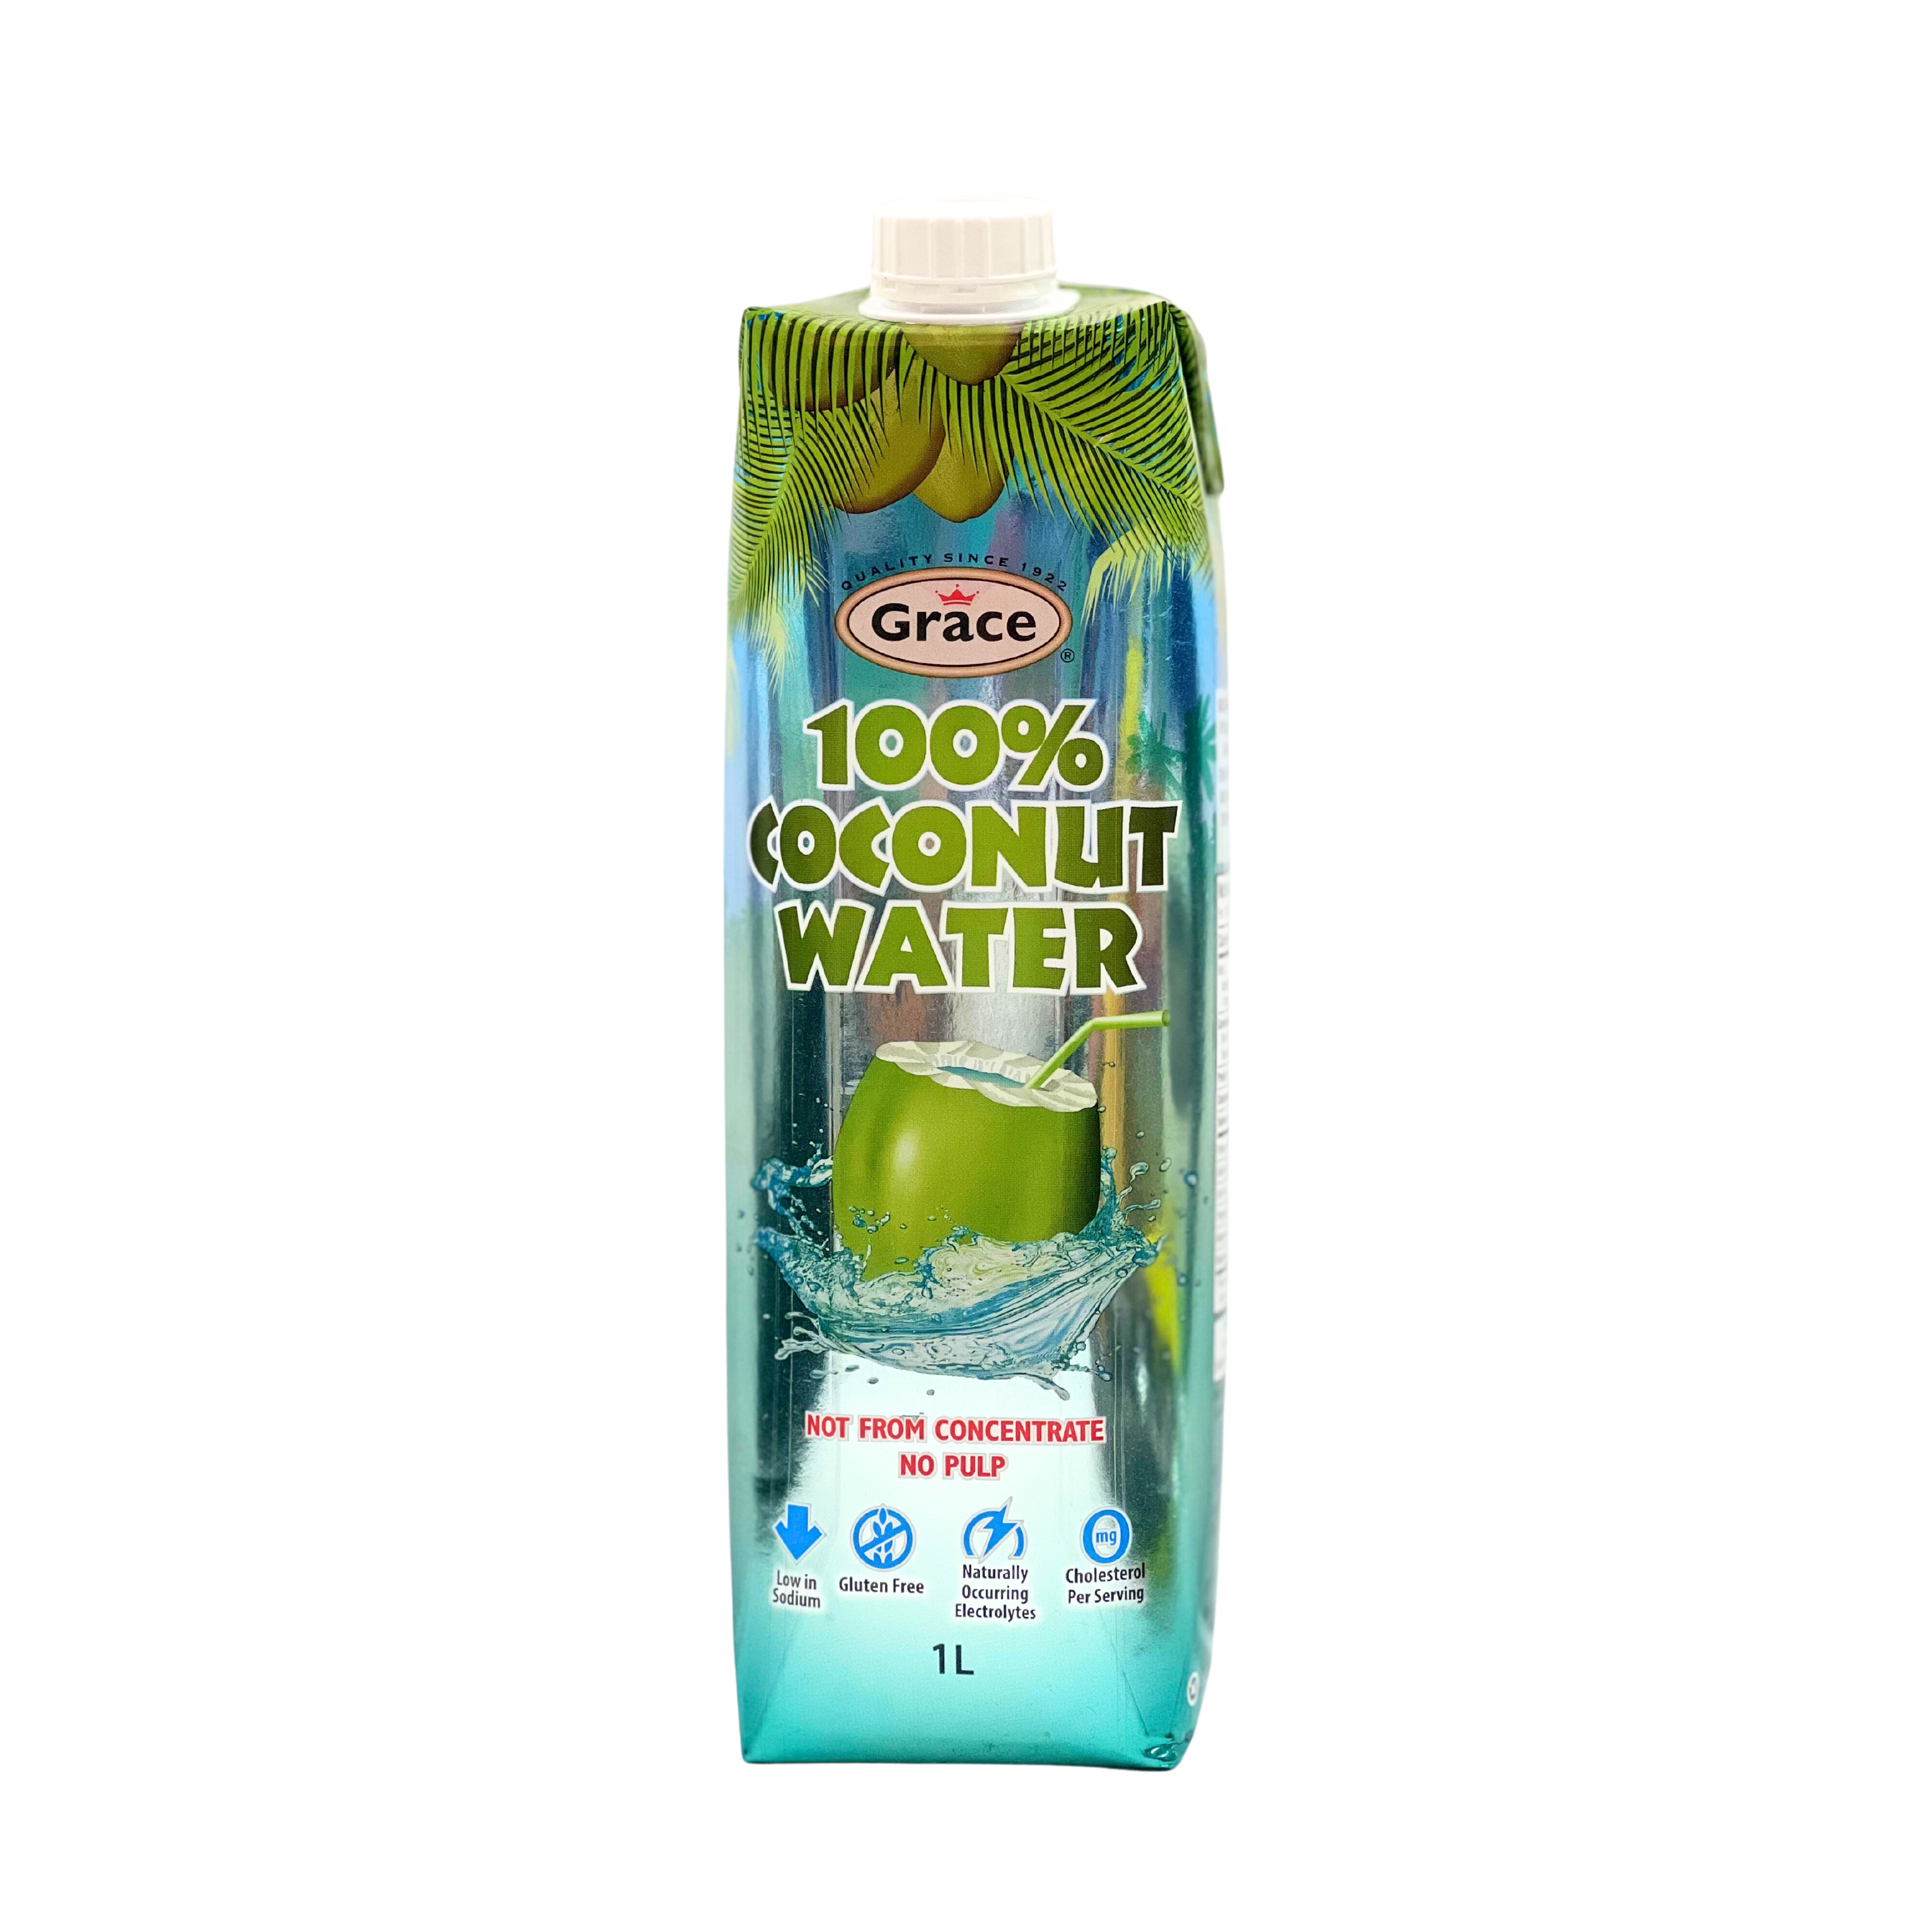 Grace Coconut Water 100% Pure 1L